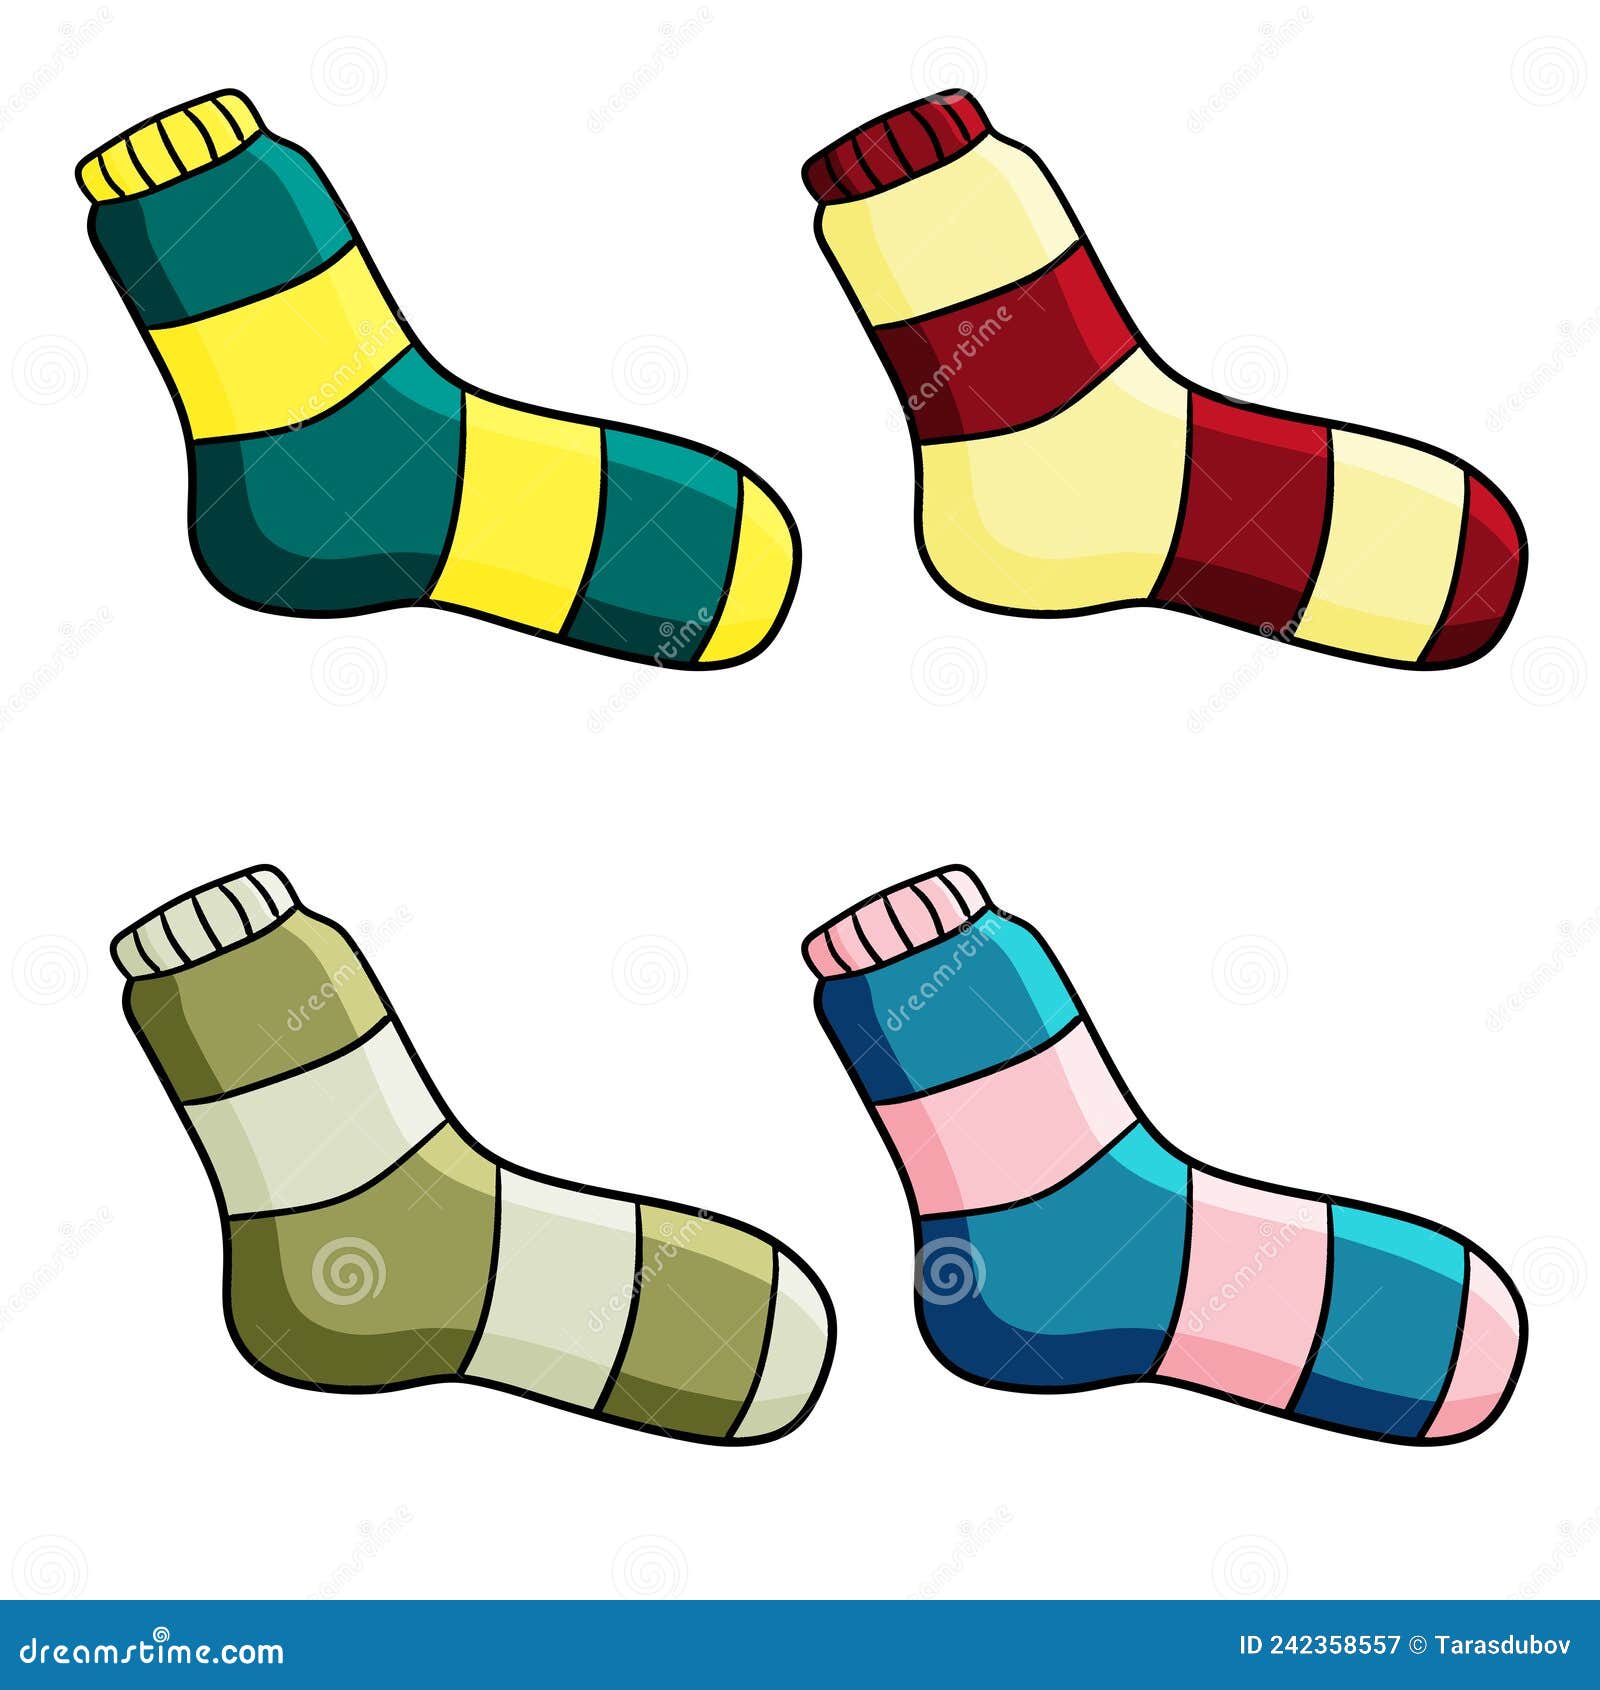 Baby Sock. Striped Stocking for Feet. Children Clothing Stock Vector ...